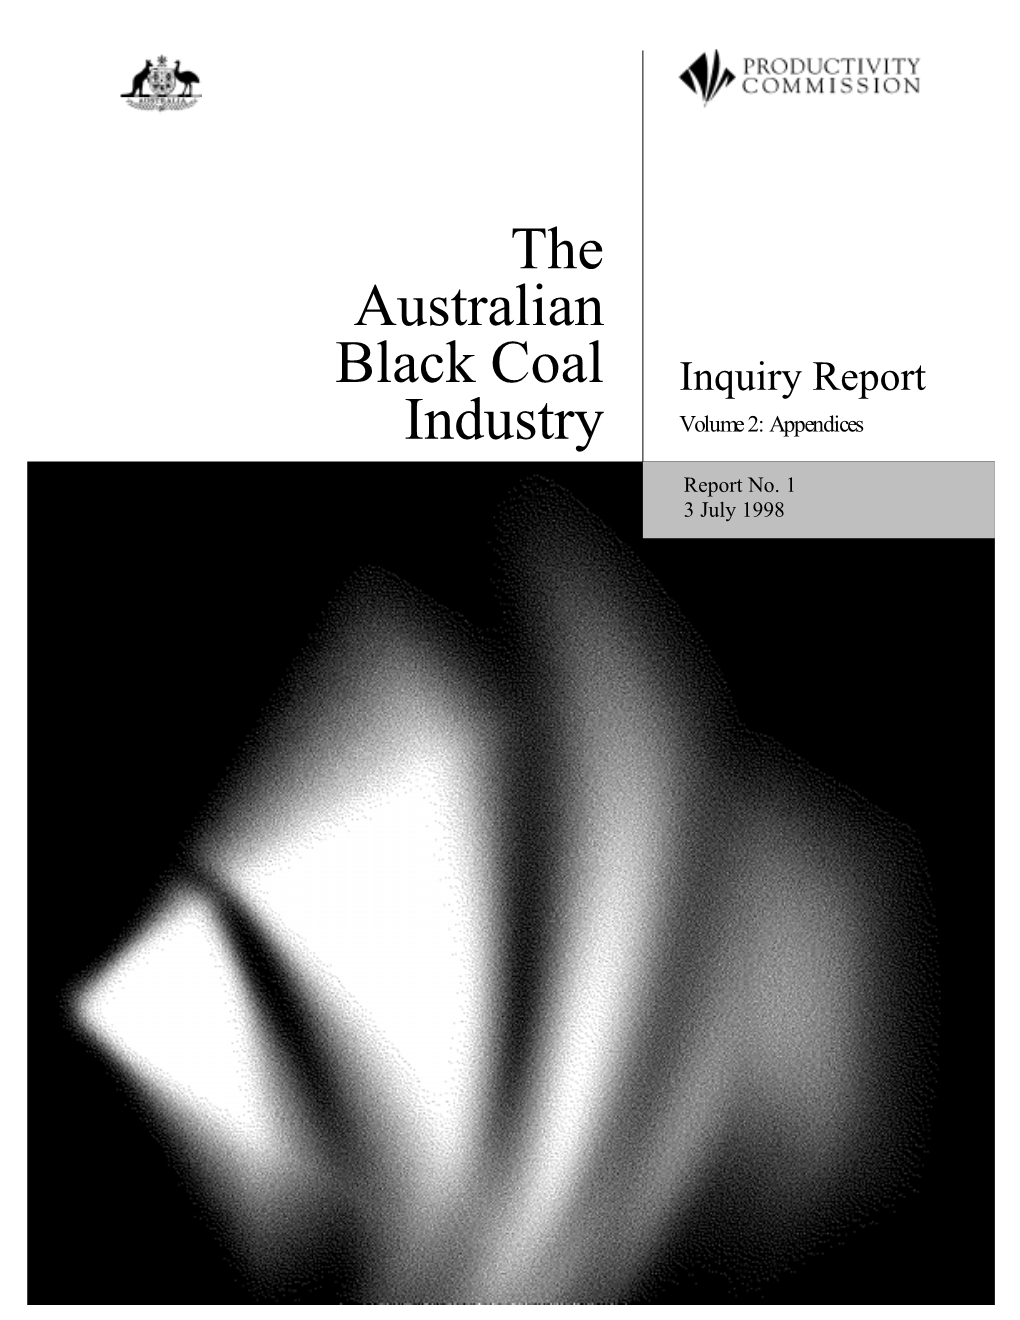 The Australian Black Coal Industry